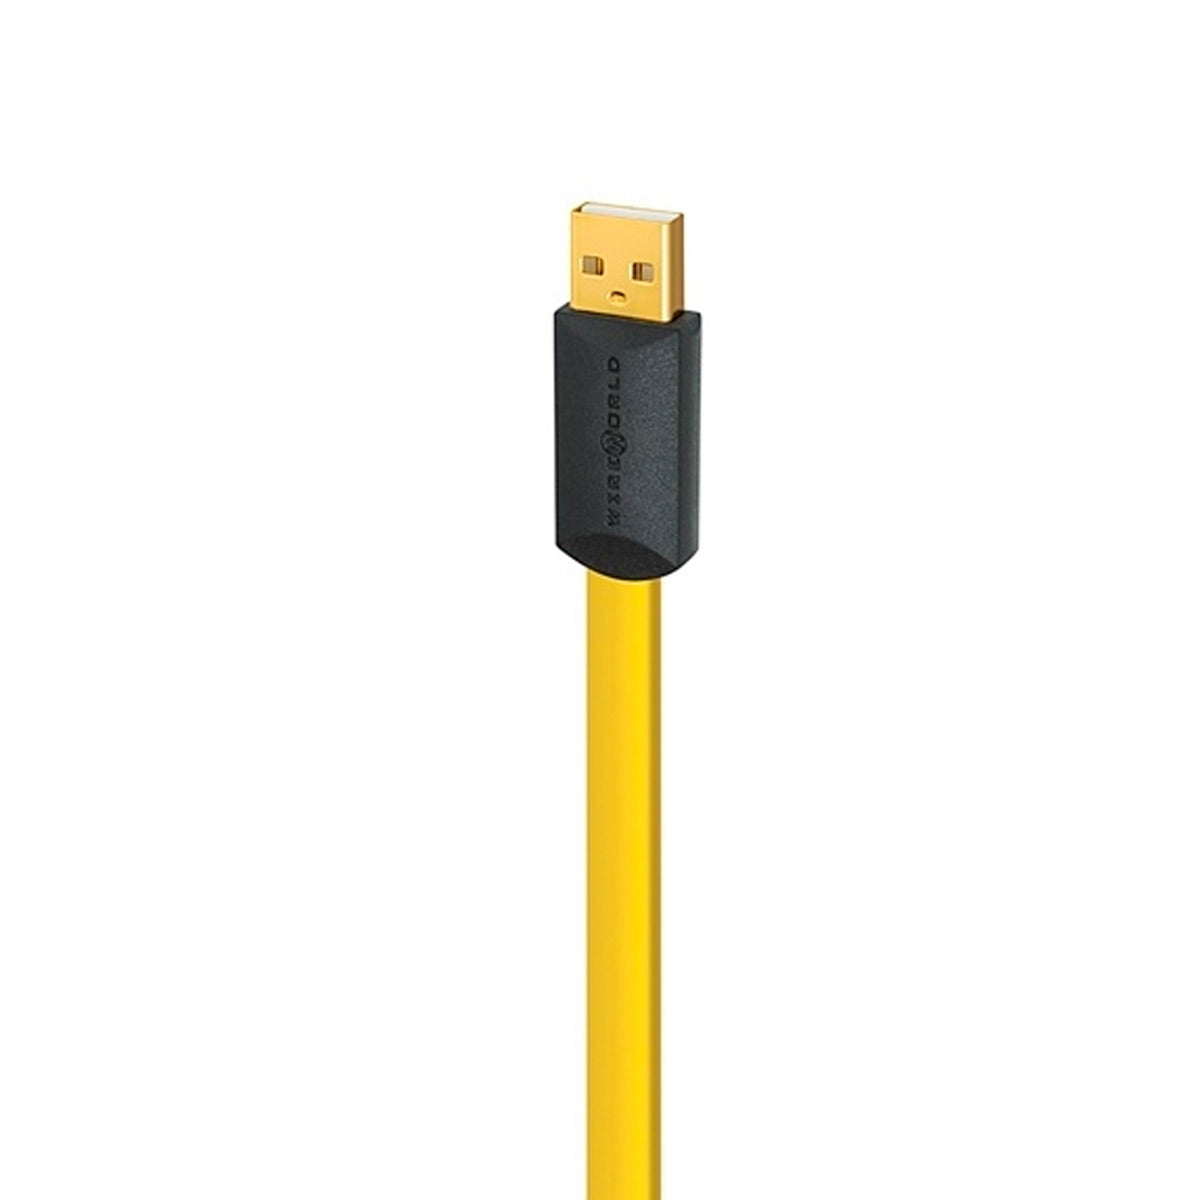 Cable USB WireWorld Chroma 7  Usb 2.0 A a Mini B CSM 1 Mts Open Box